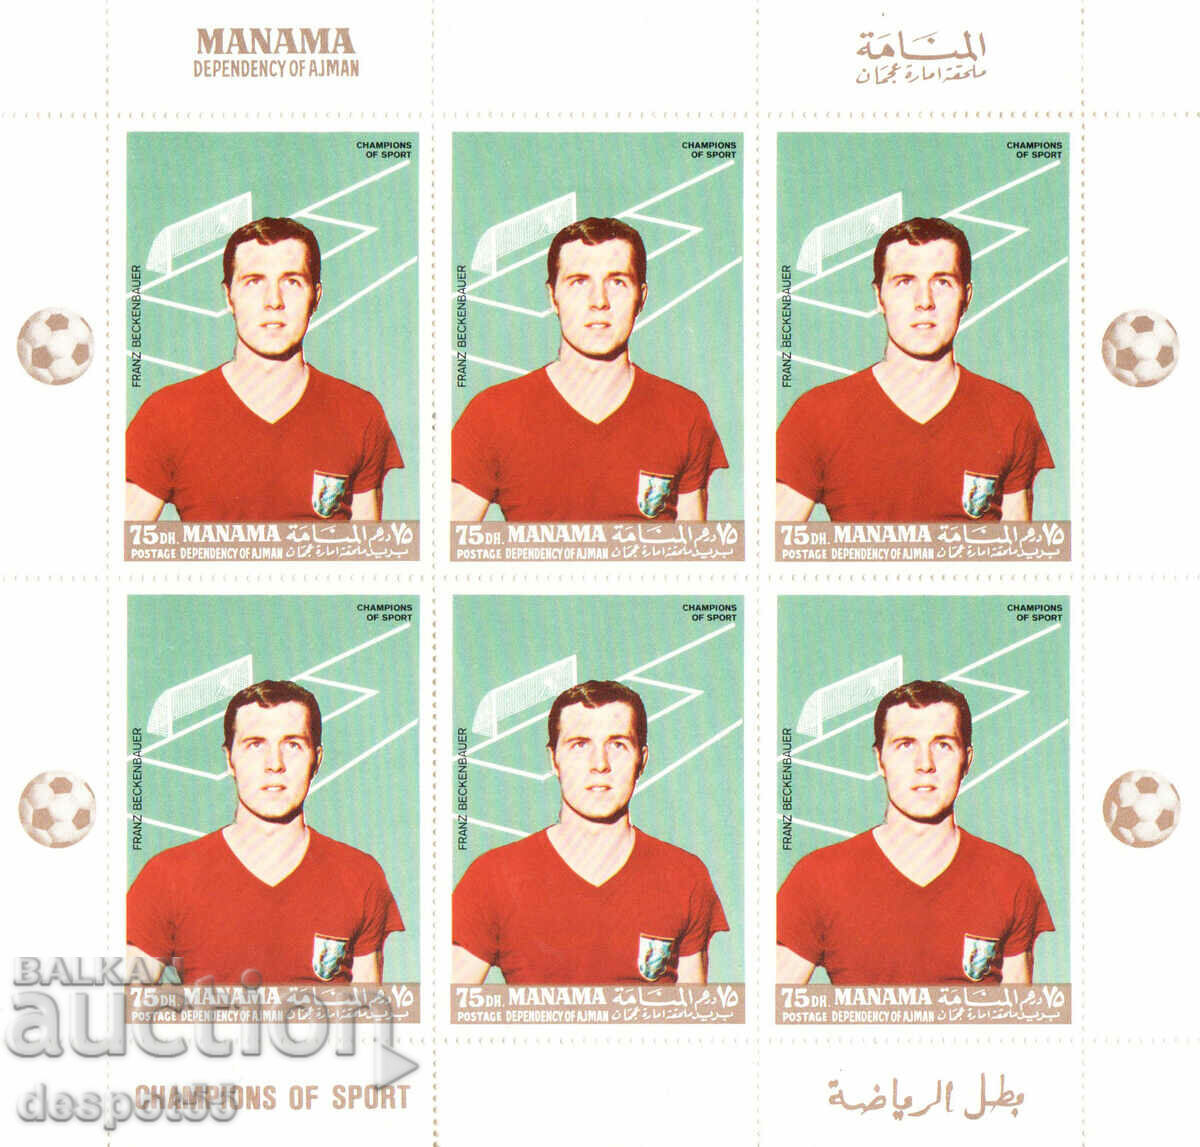 1969. Manama (UAE). Football stars. 6 Block sheets.